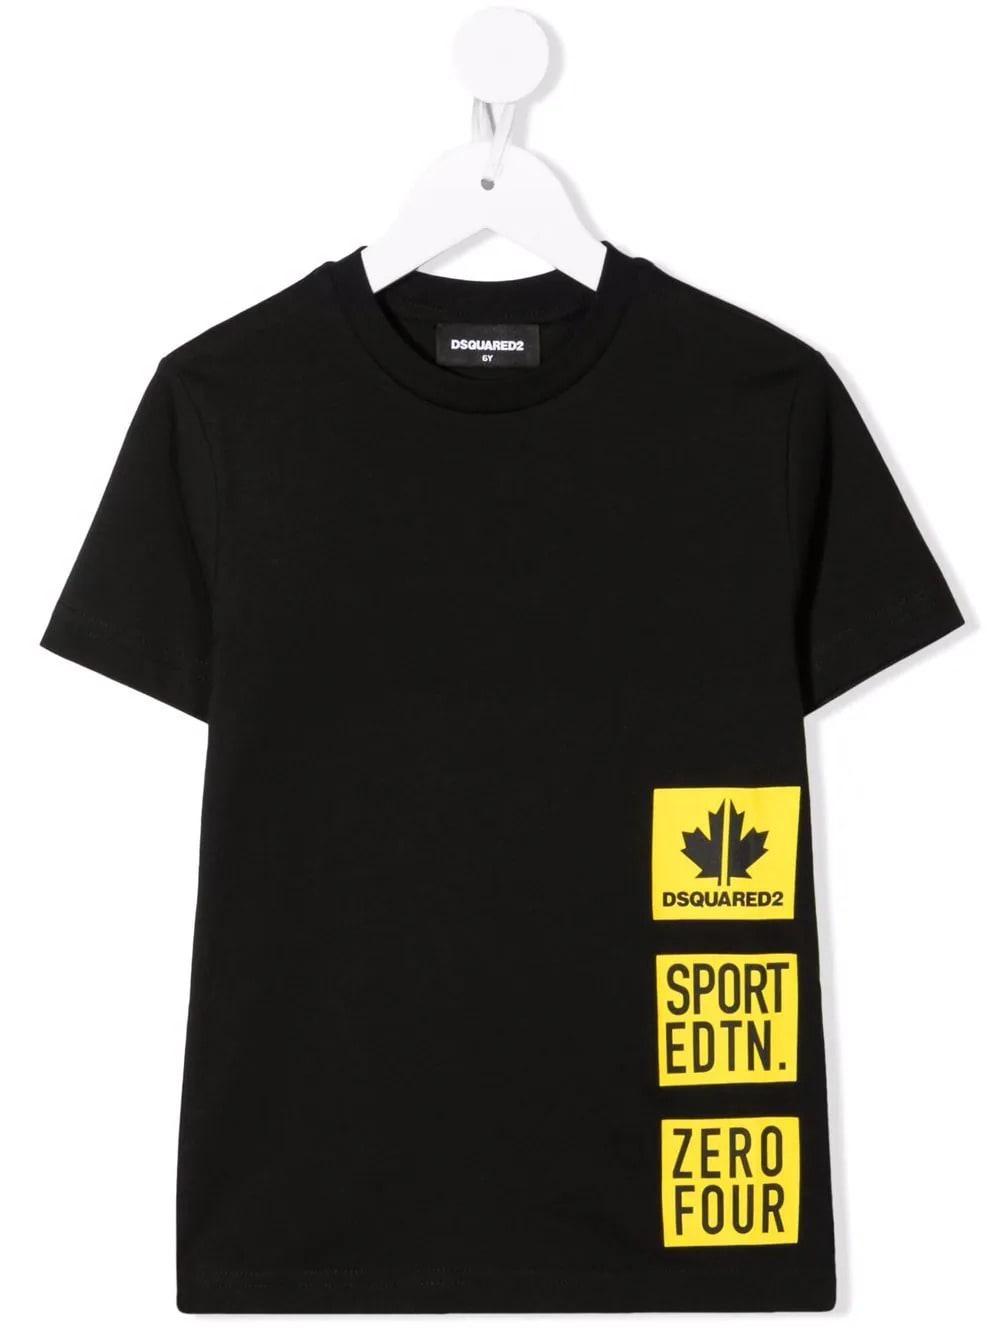 Dsquared2 Kids Sport Edtn. Black T-shirt